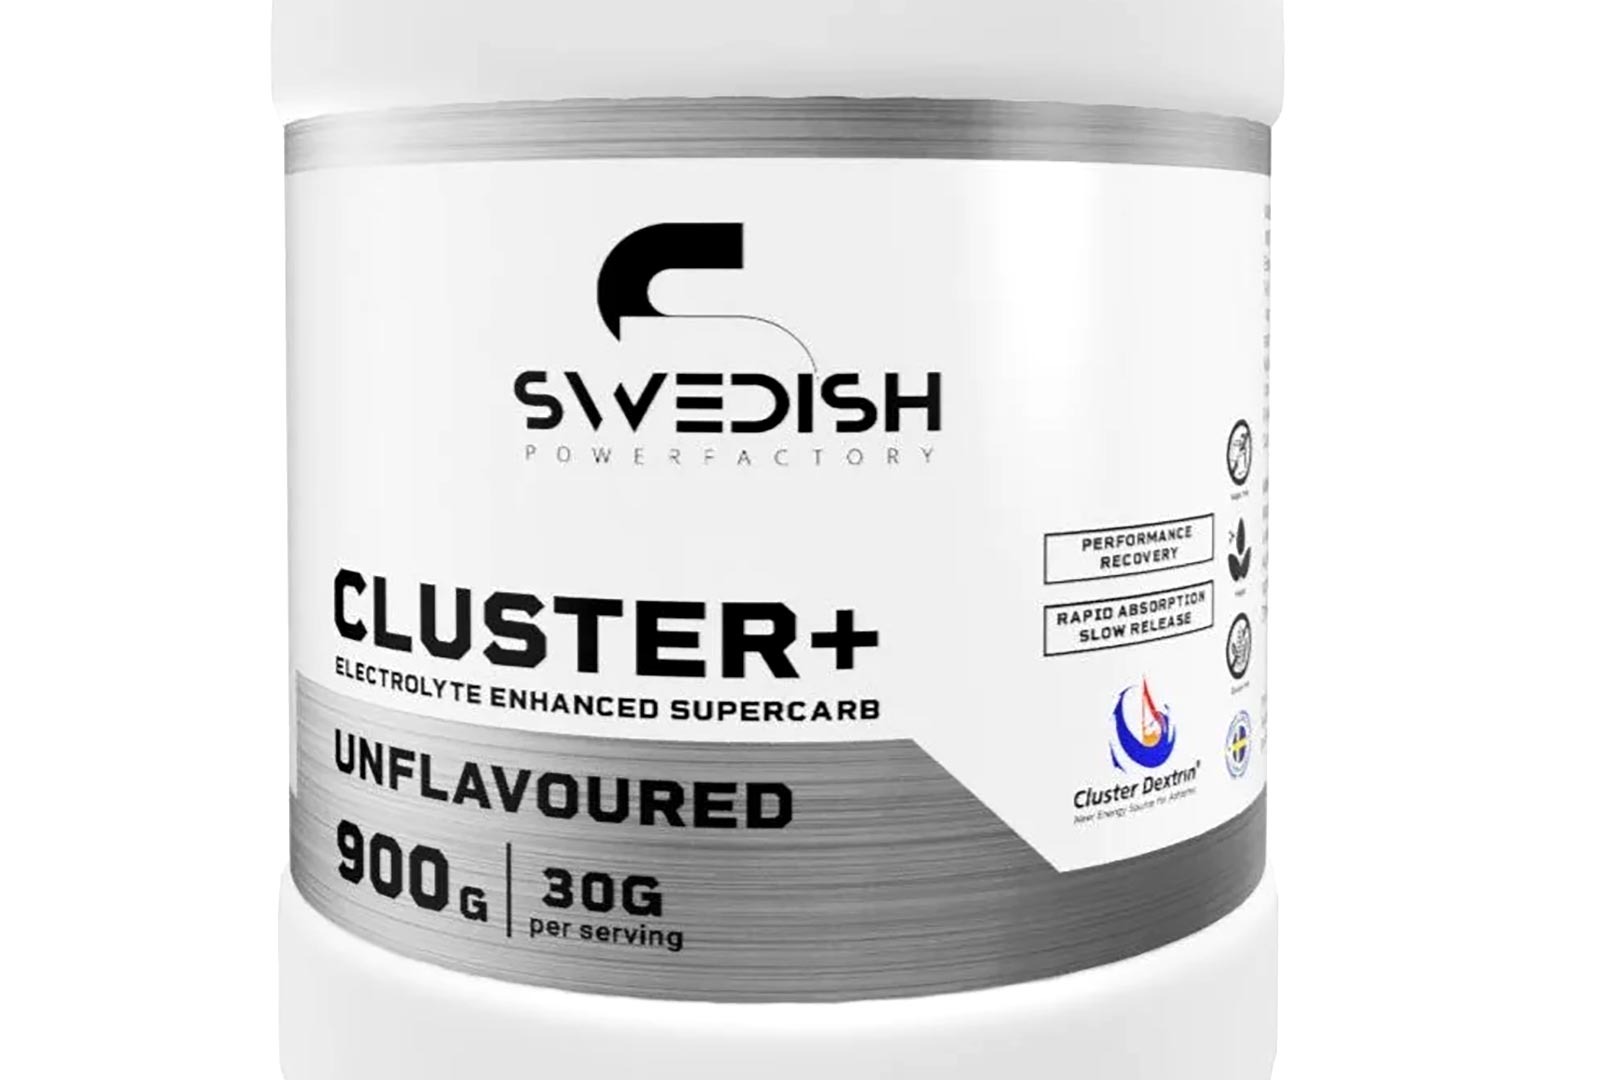 Swedish Powerfactory Cluster Dextrin